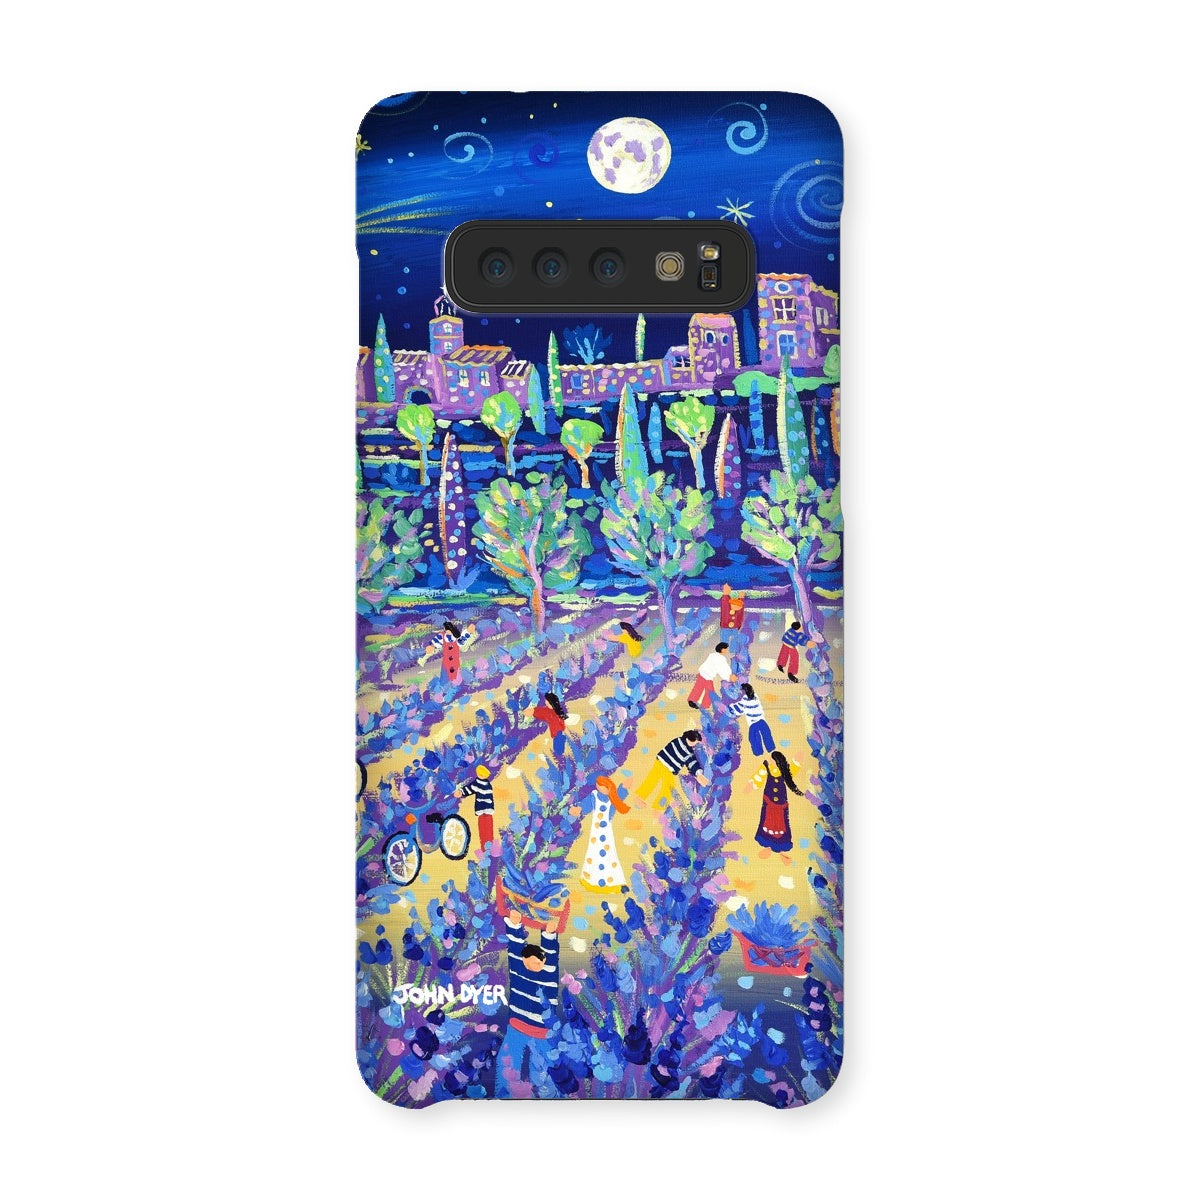 Snap Art Phone Case. Lavender Pickers, Provence, France. Artist John Dyer. Cornwall Art Gallery.